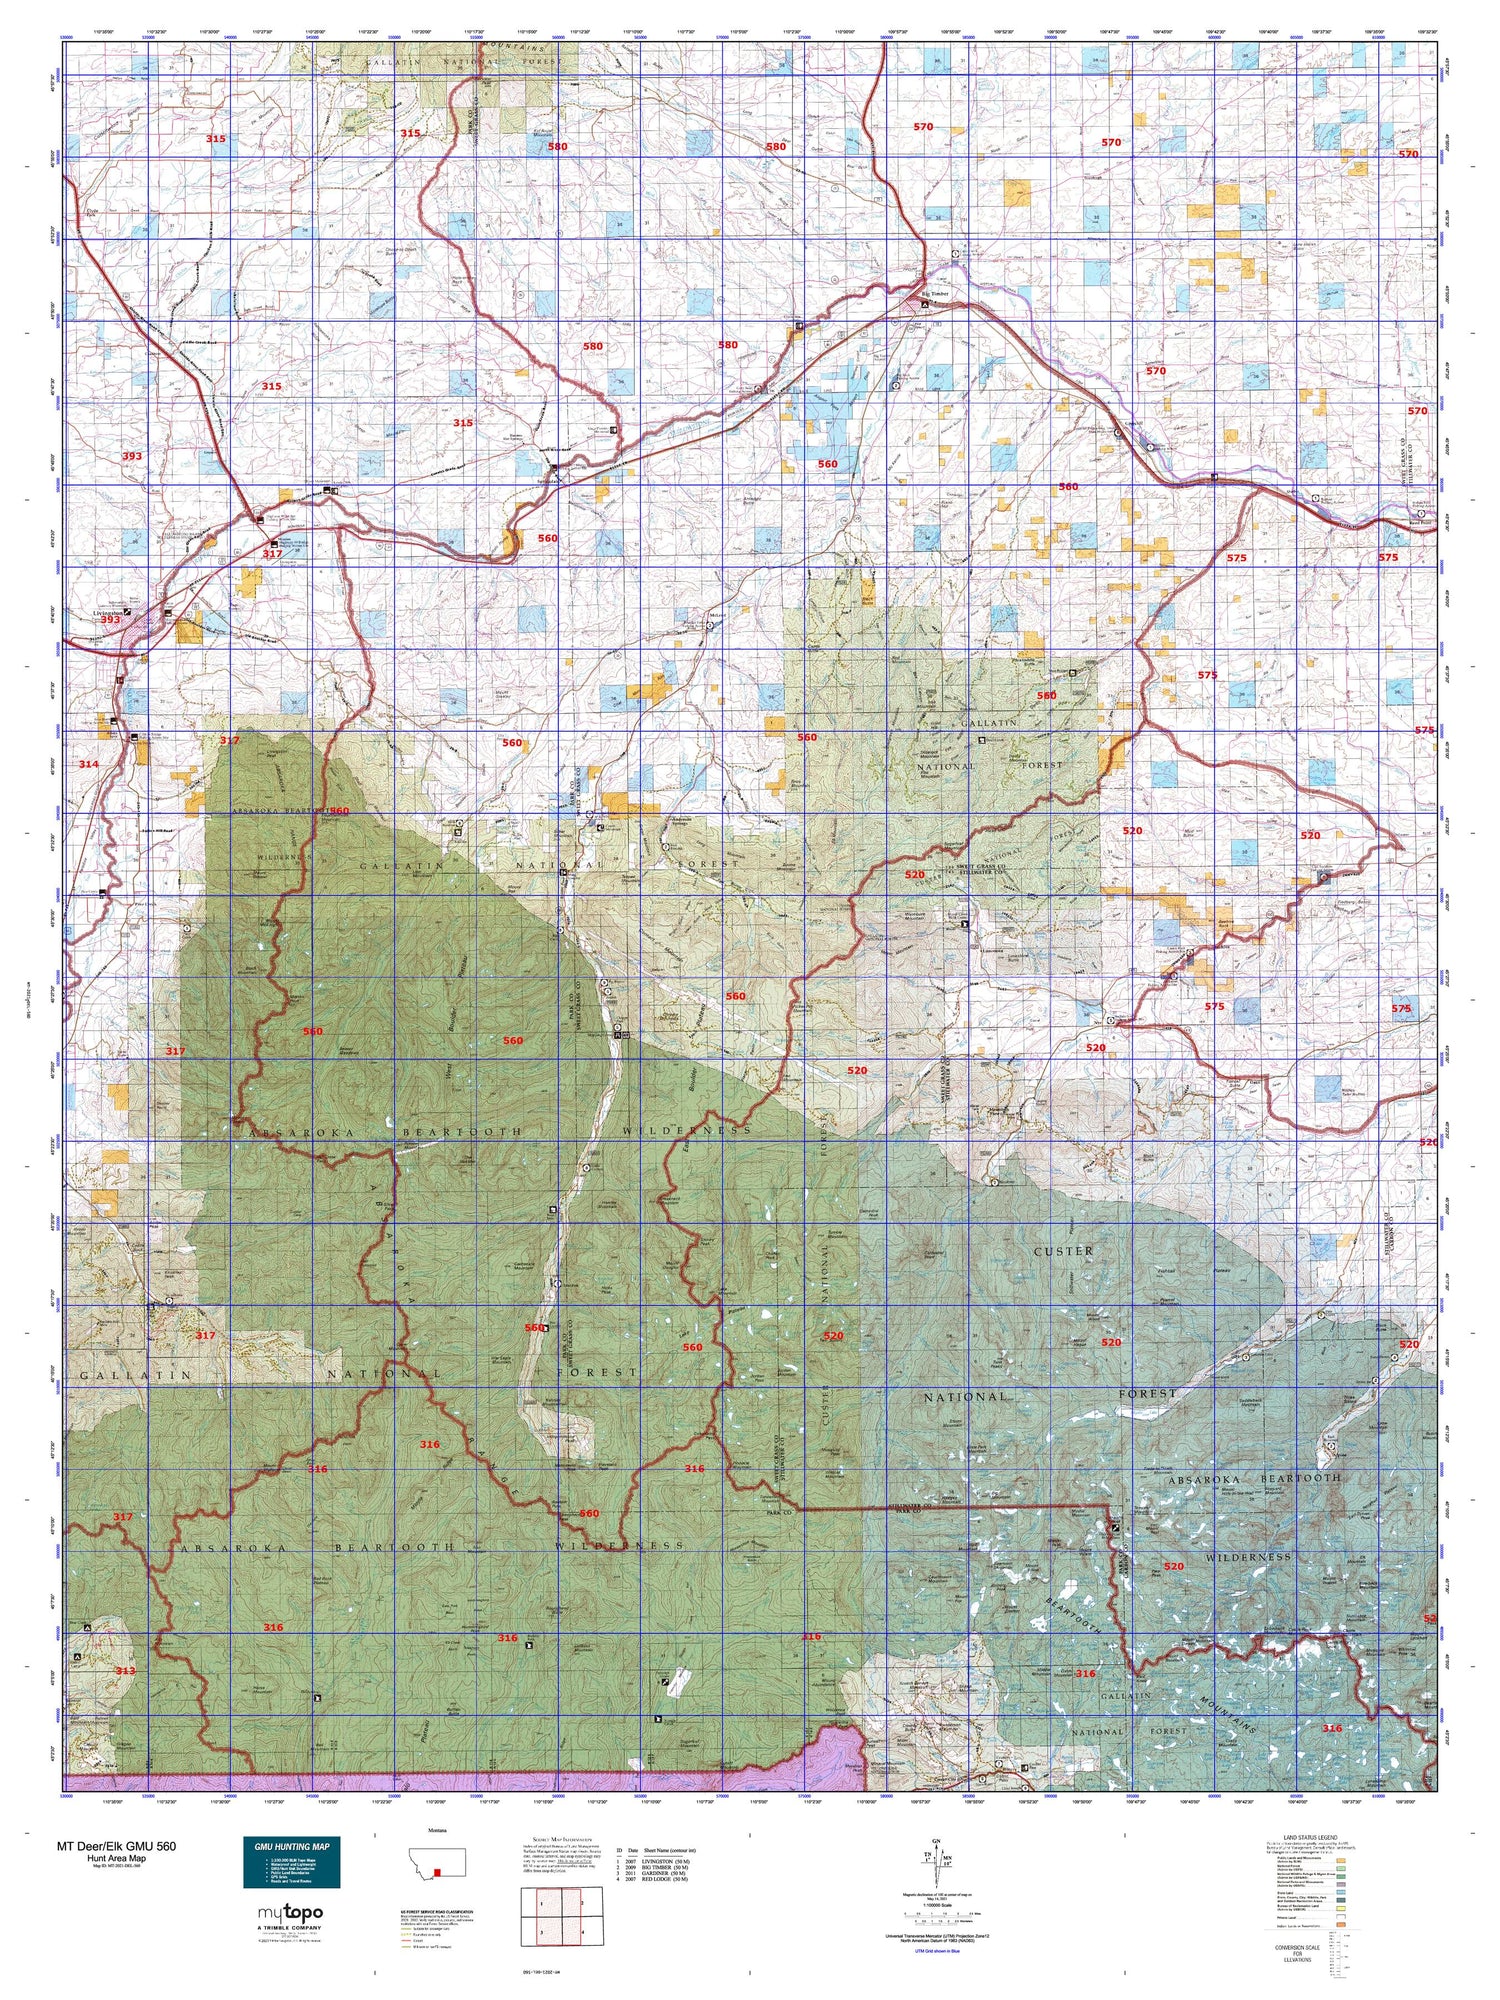 Montana Deer/Elk GMU 560 Map Image